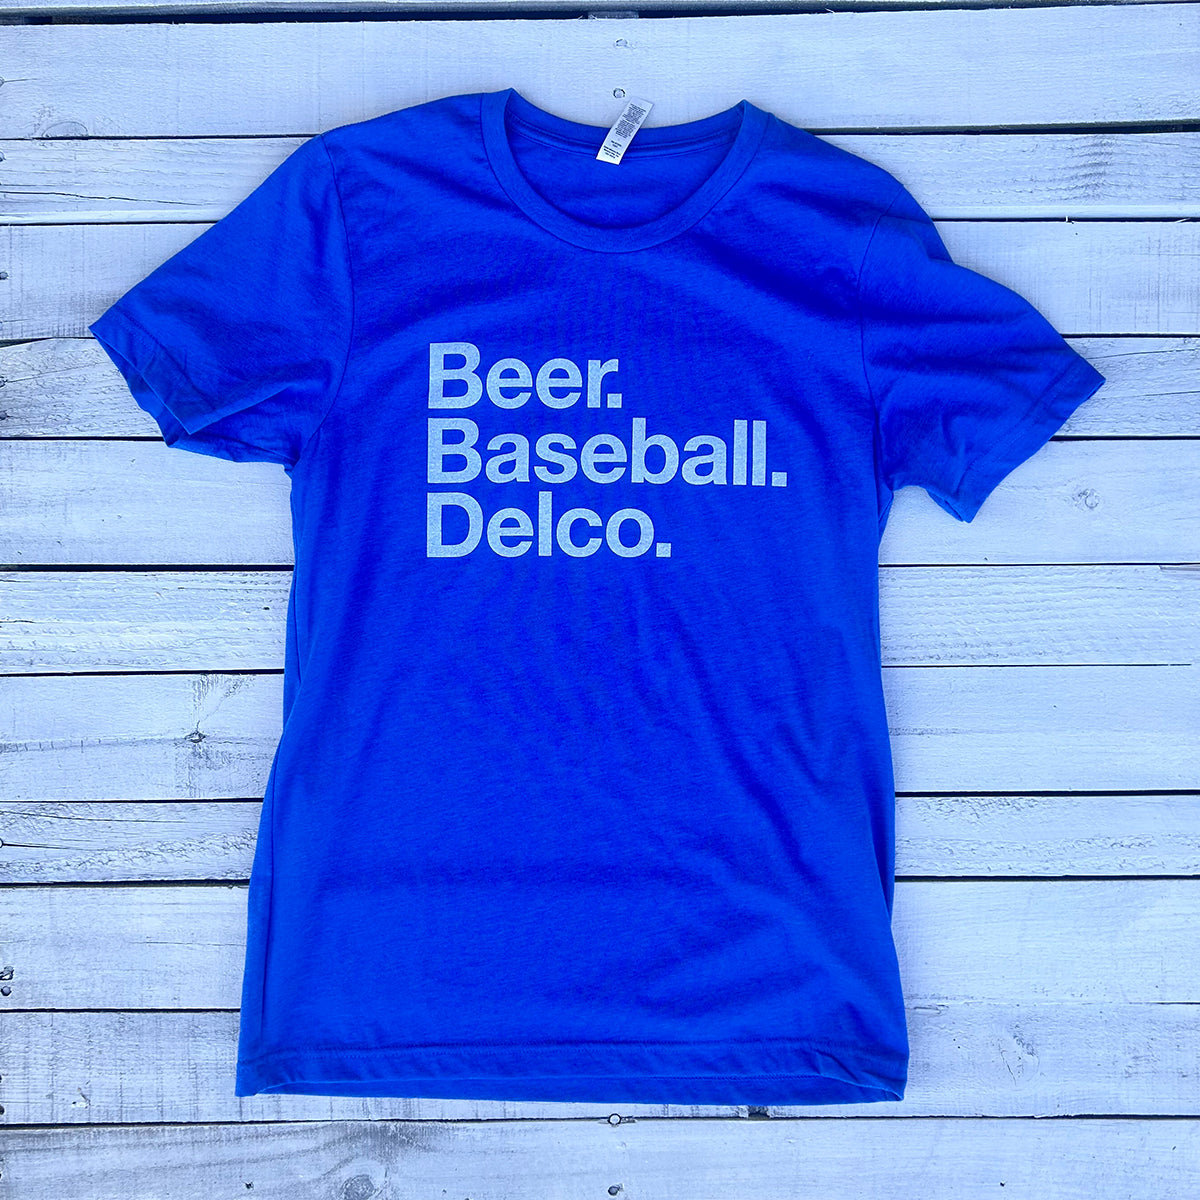 Beer. Baseball. Delco. Blue